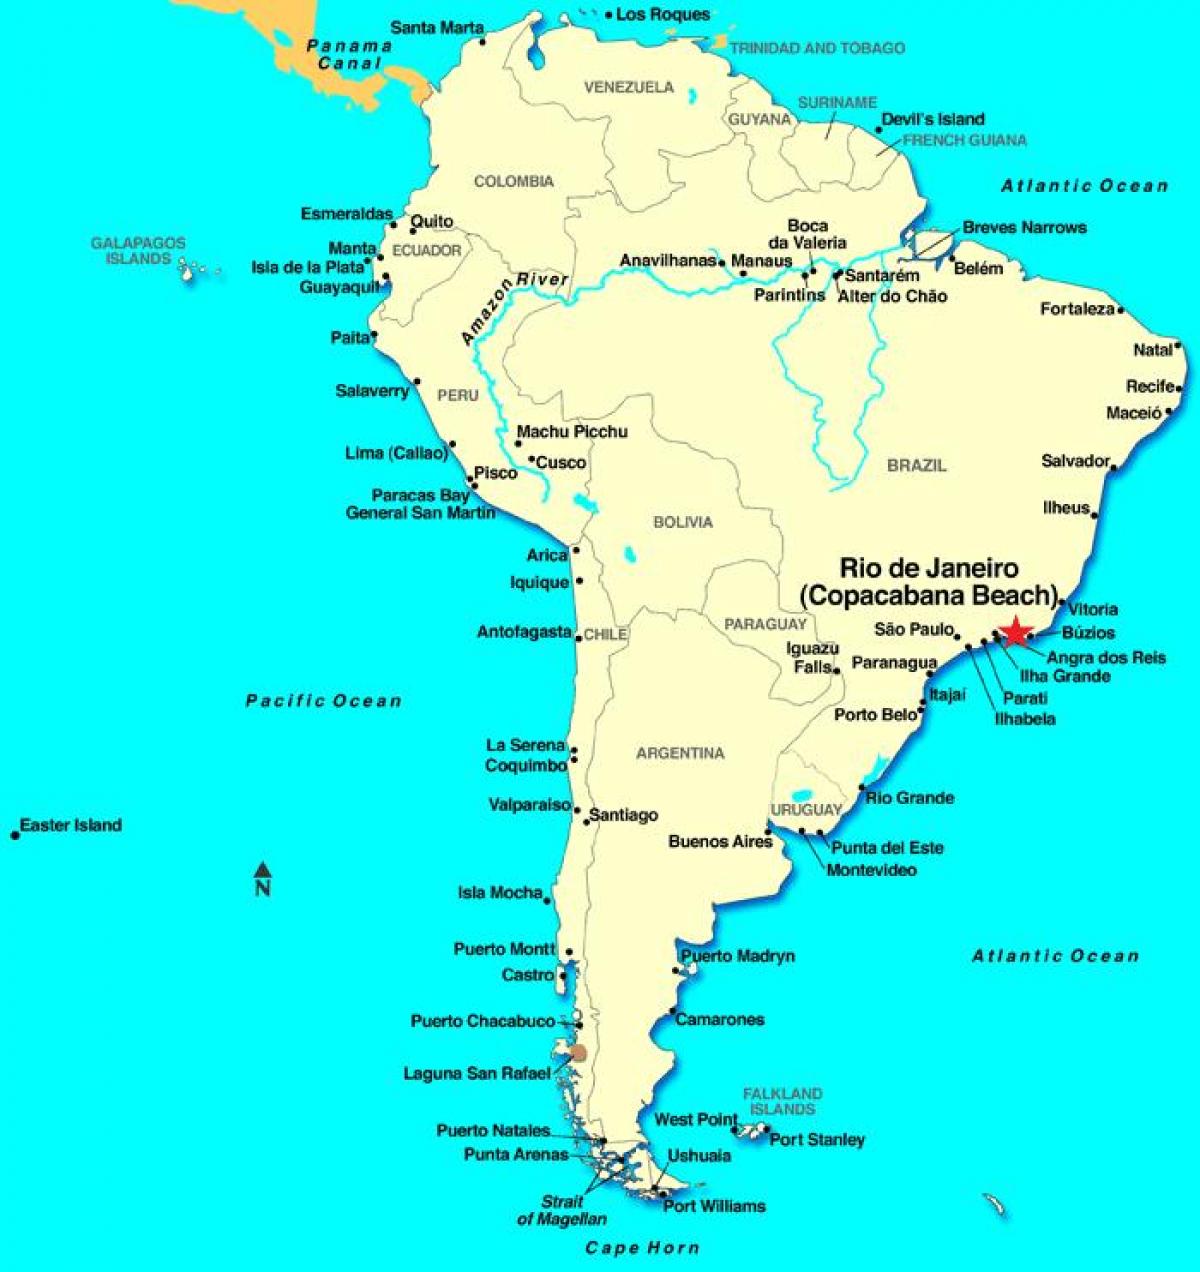 नक्शे के रियो डी जनेरियो में दक्षिण अमेरिका